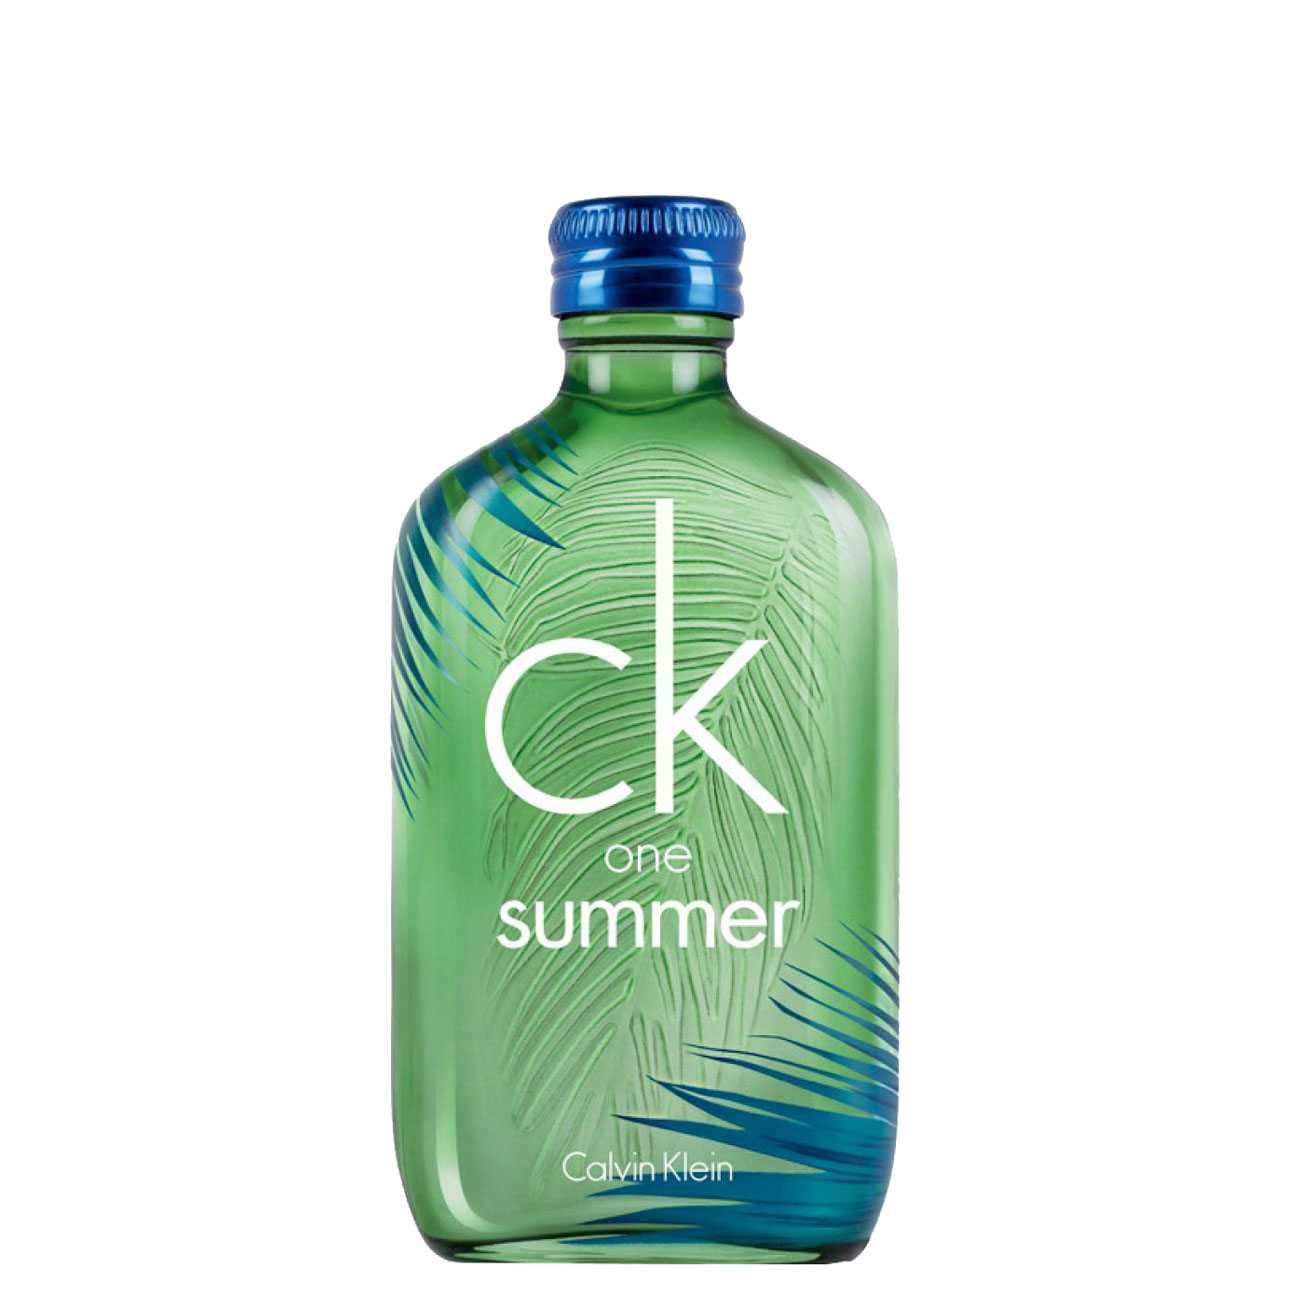 CK ONE SUMMER 100ml Calvin Klein bestvalue.eu